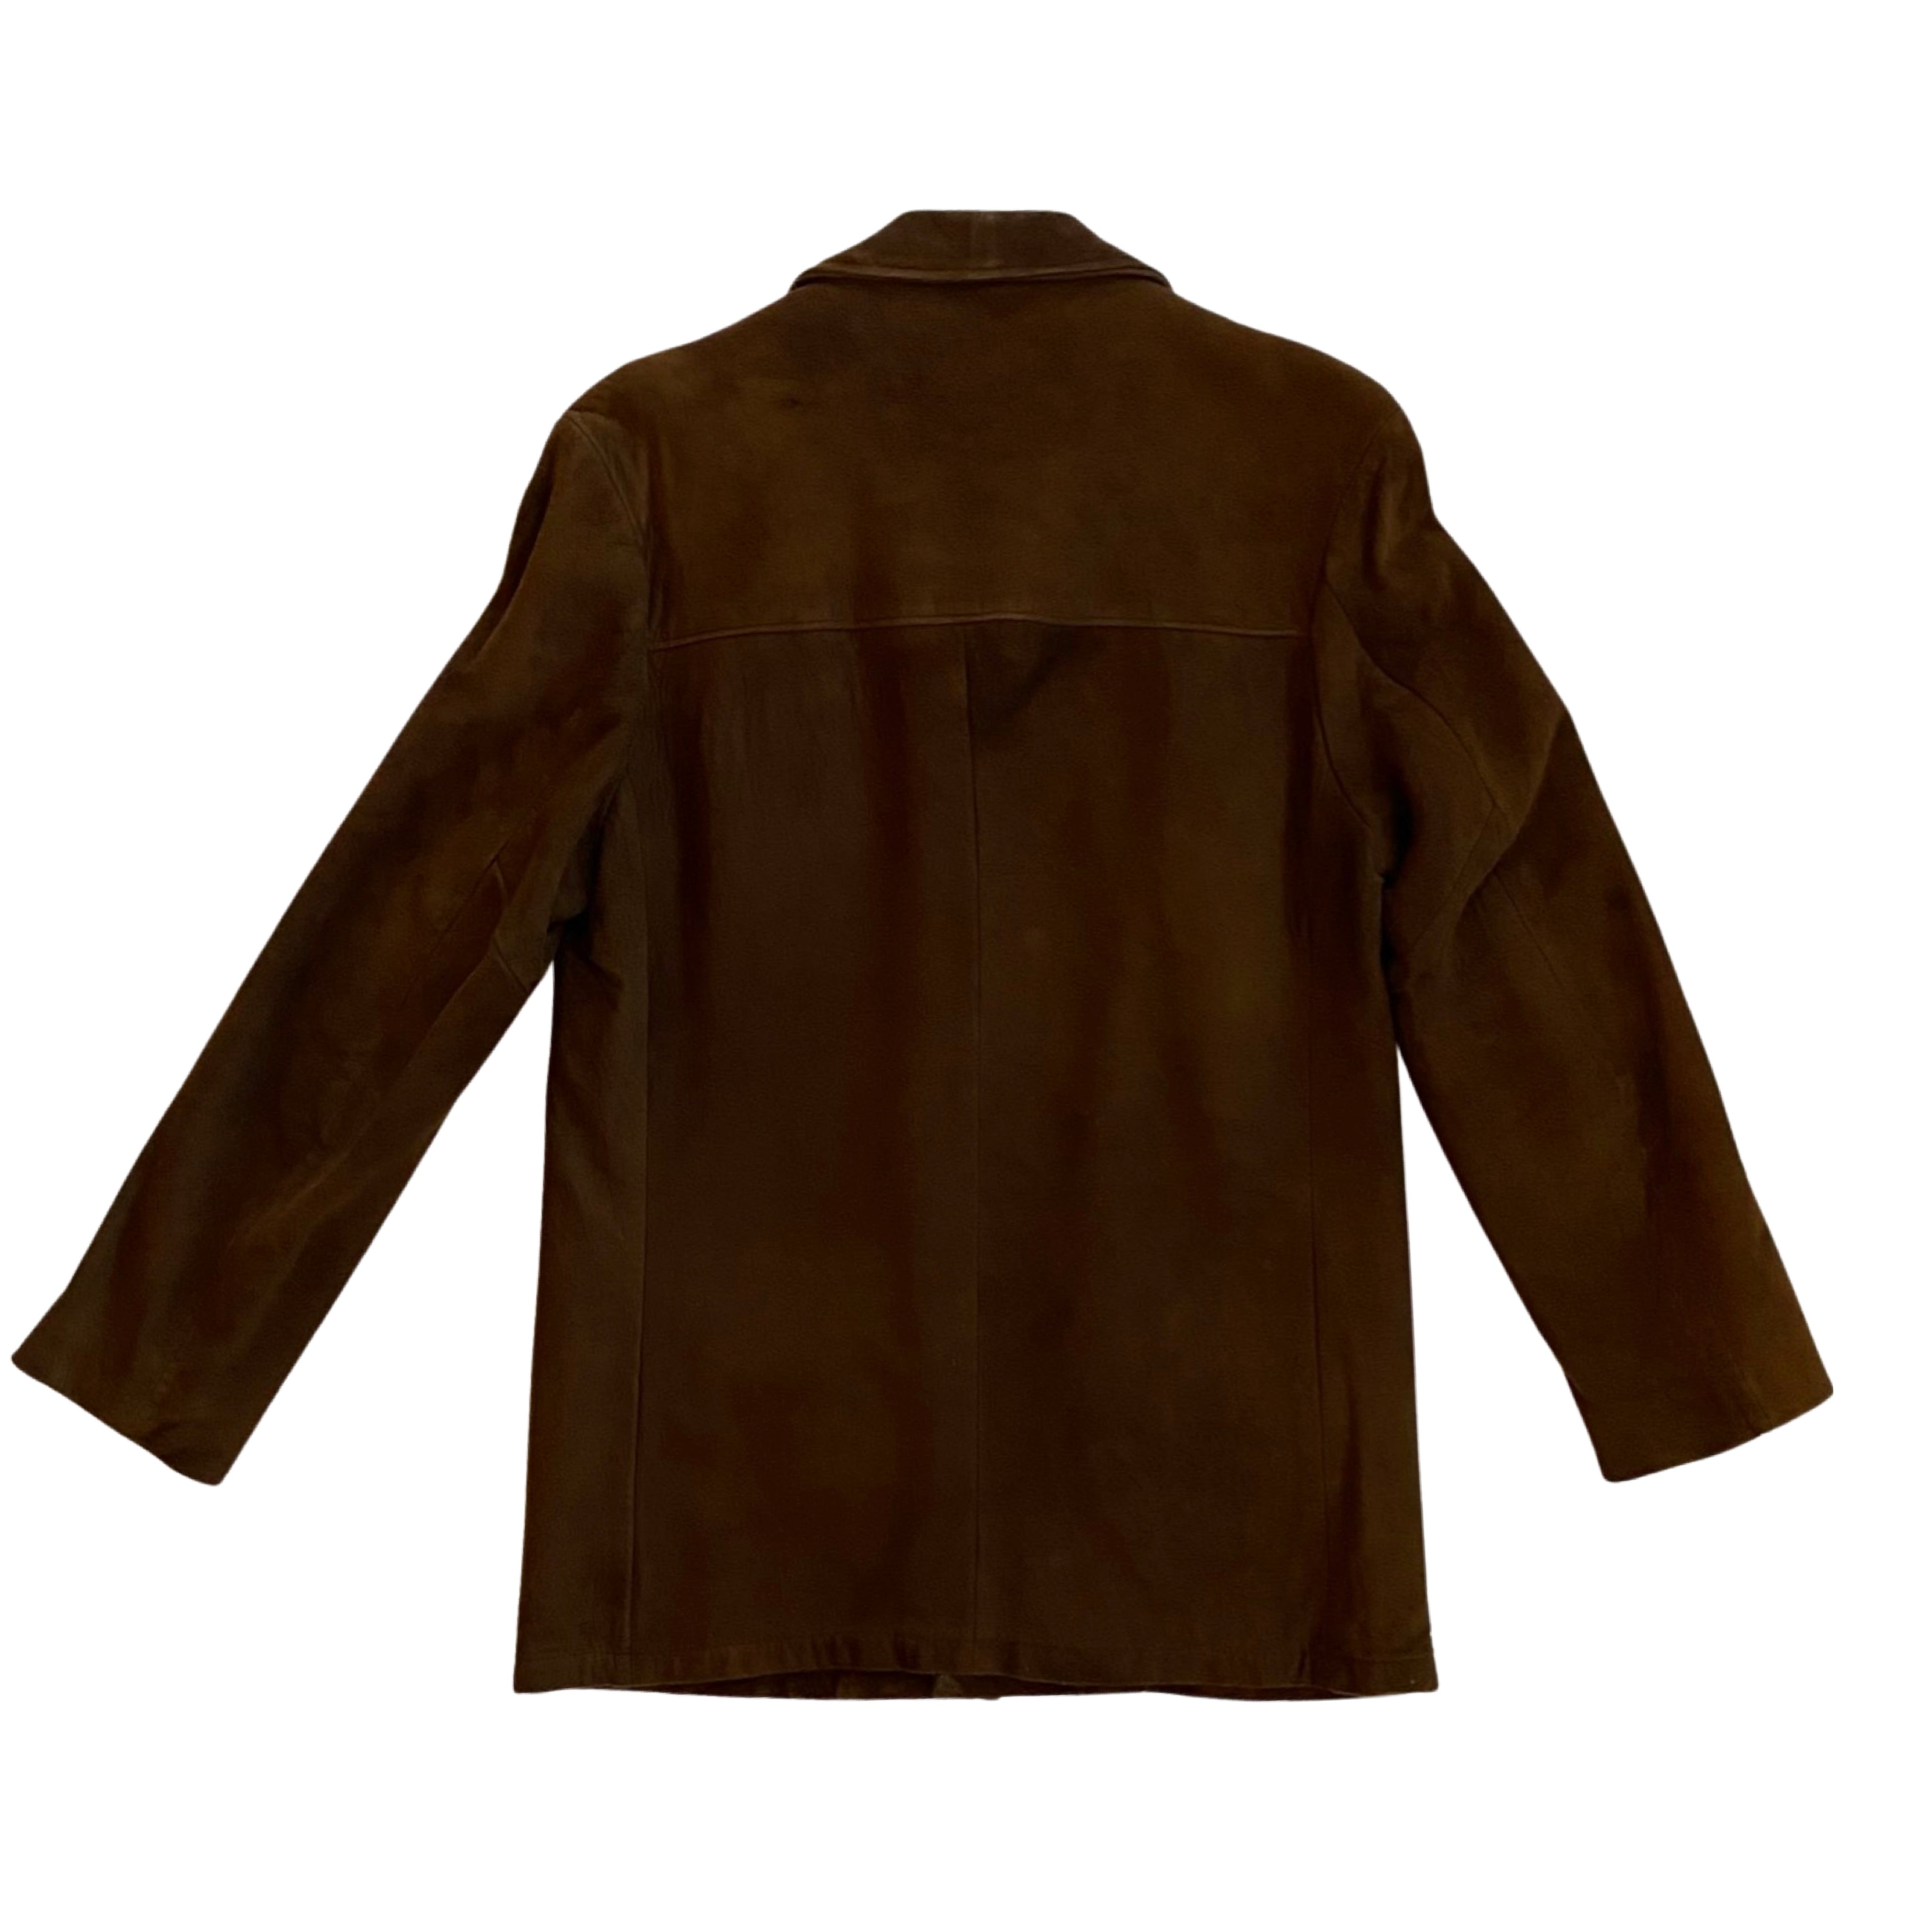 Vintage Brown Suede Coat